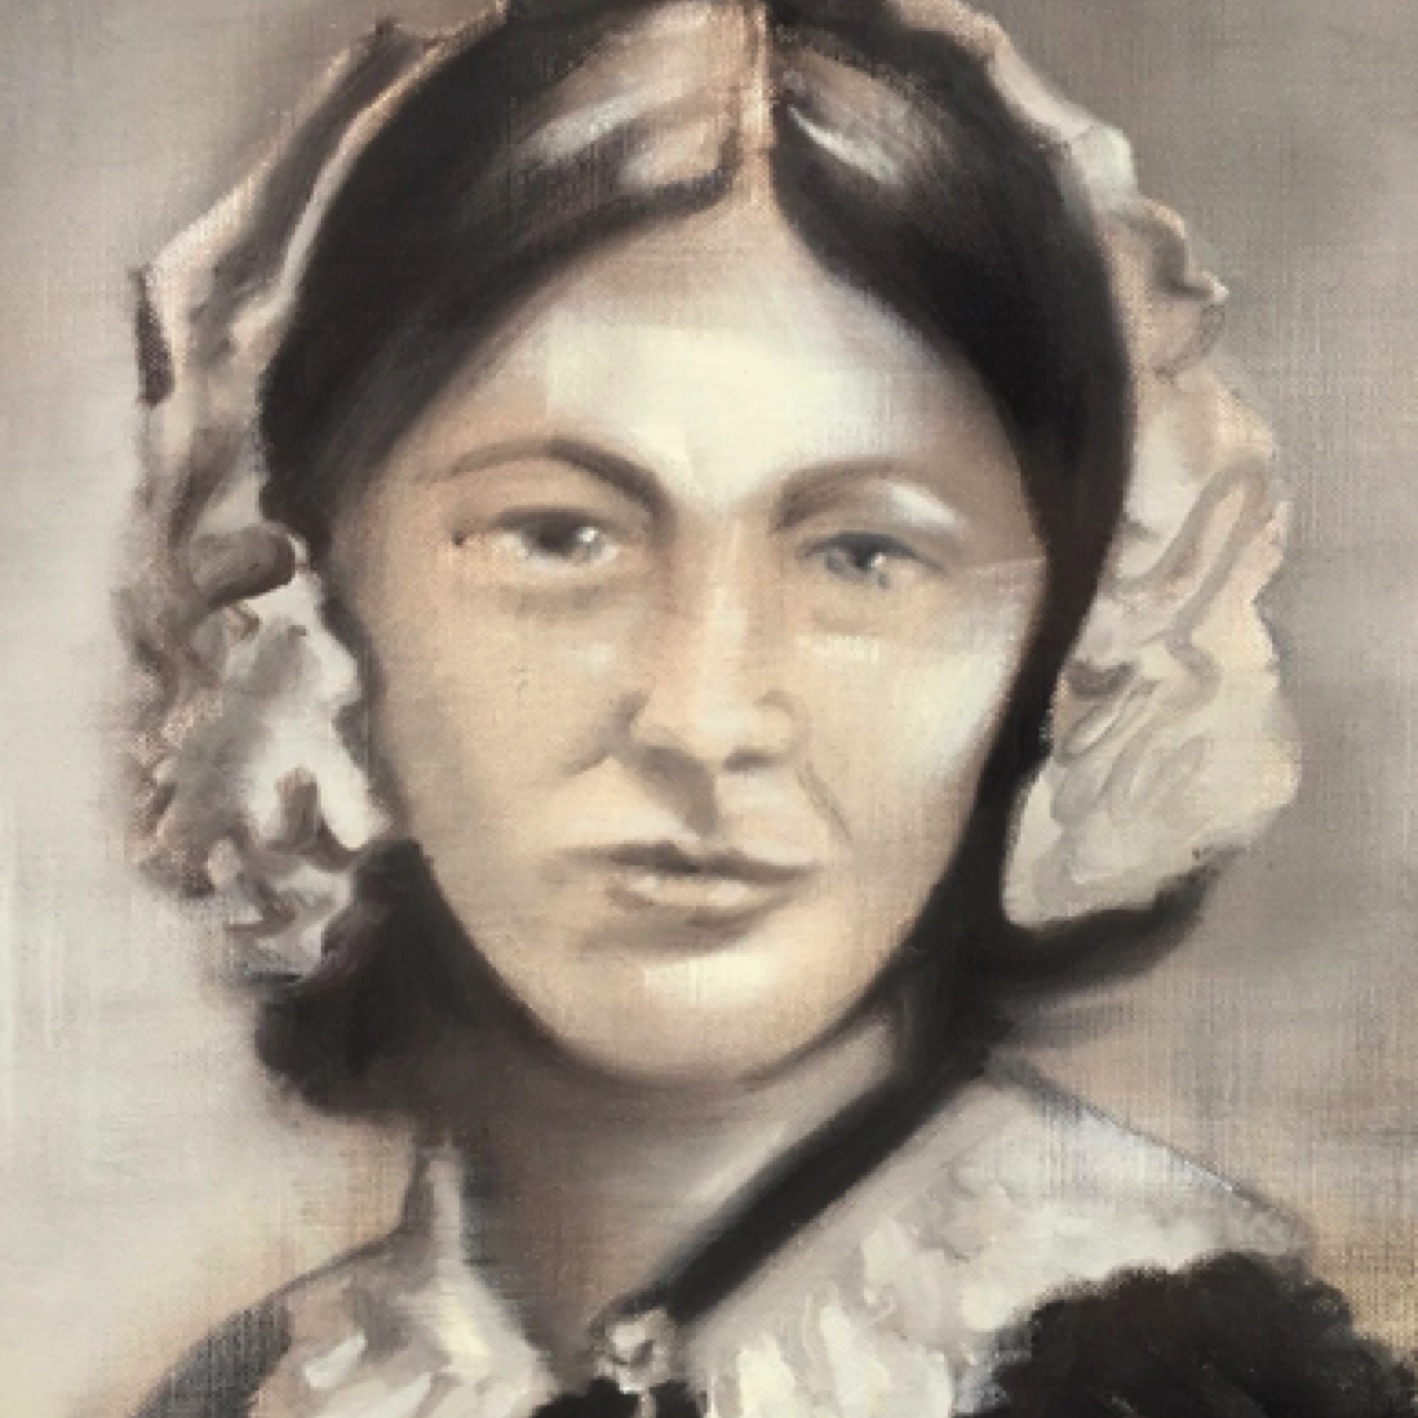 Gregg Chadwick
Florence Nightingale
14”x12” oil on linen 2019
UCLA School of Nursing Collection